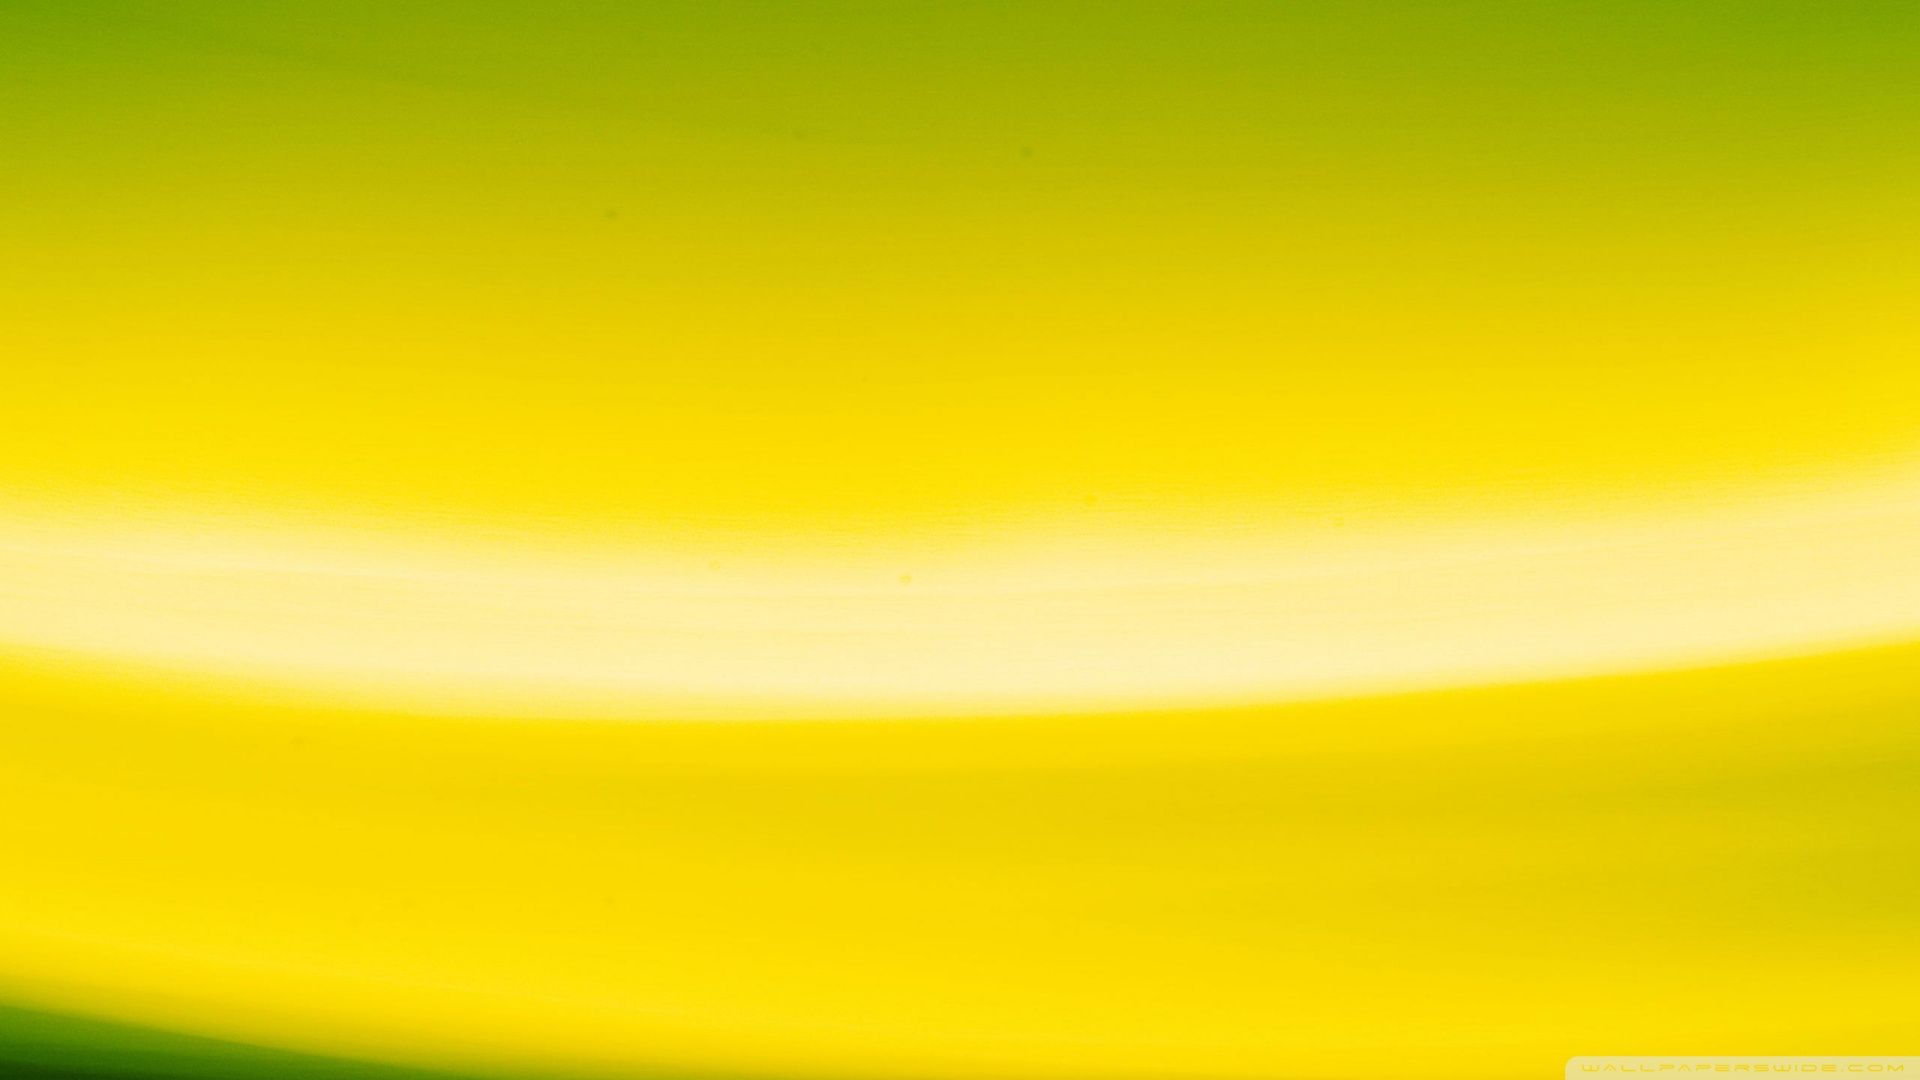 Background Yellow & Green